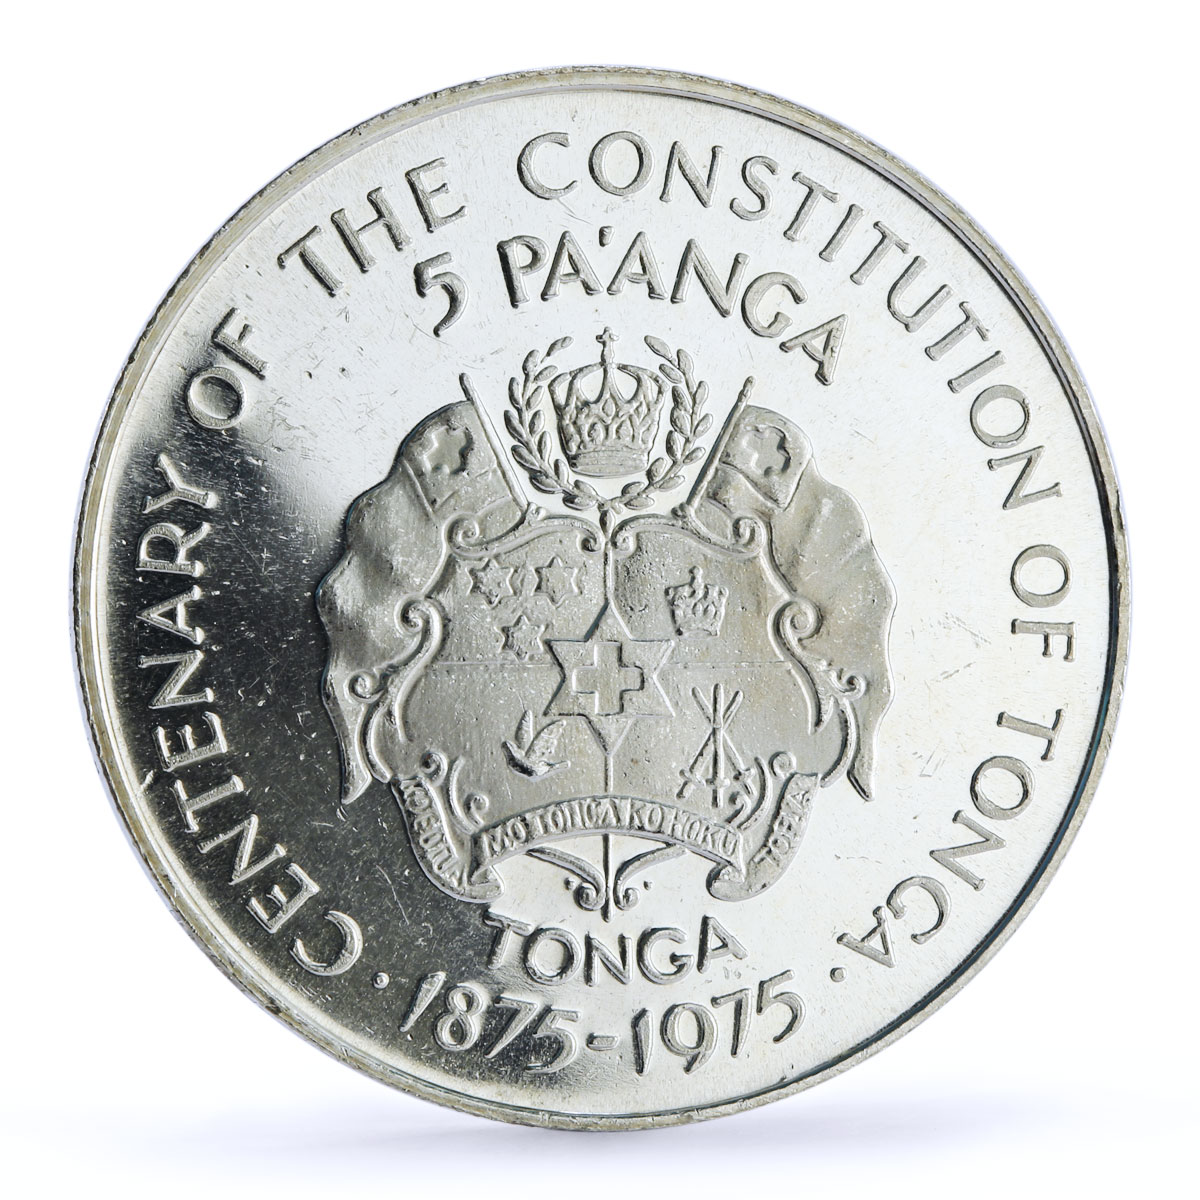 Tonga 5 paanga Constitution Centennial King Tupou IV Politics silver coin 1975